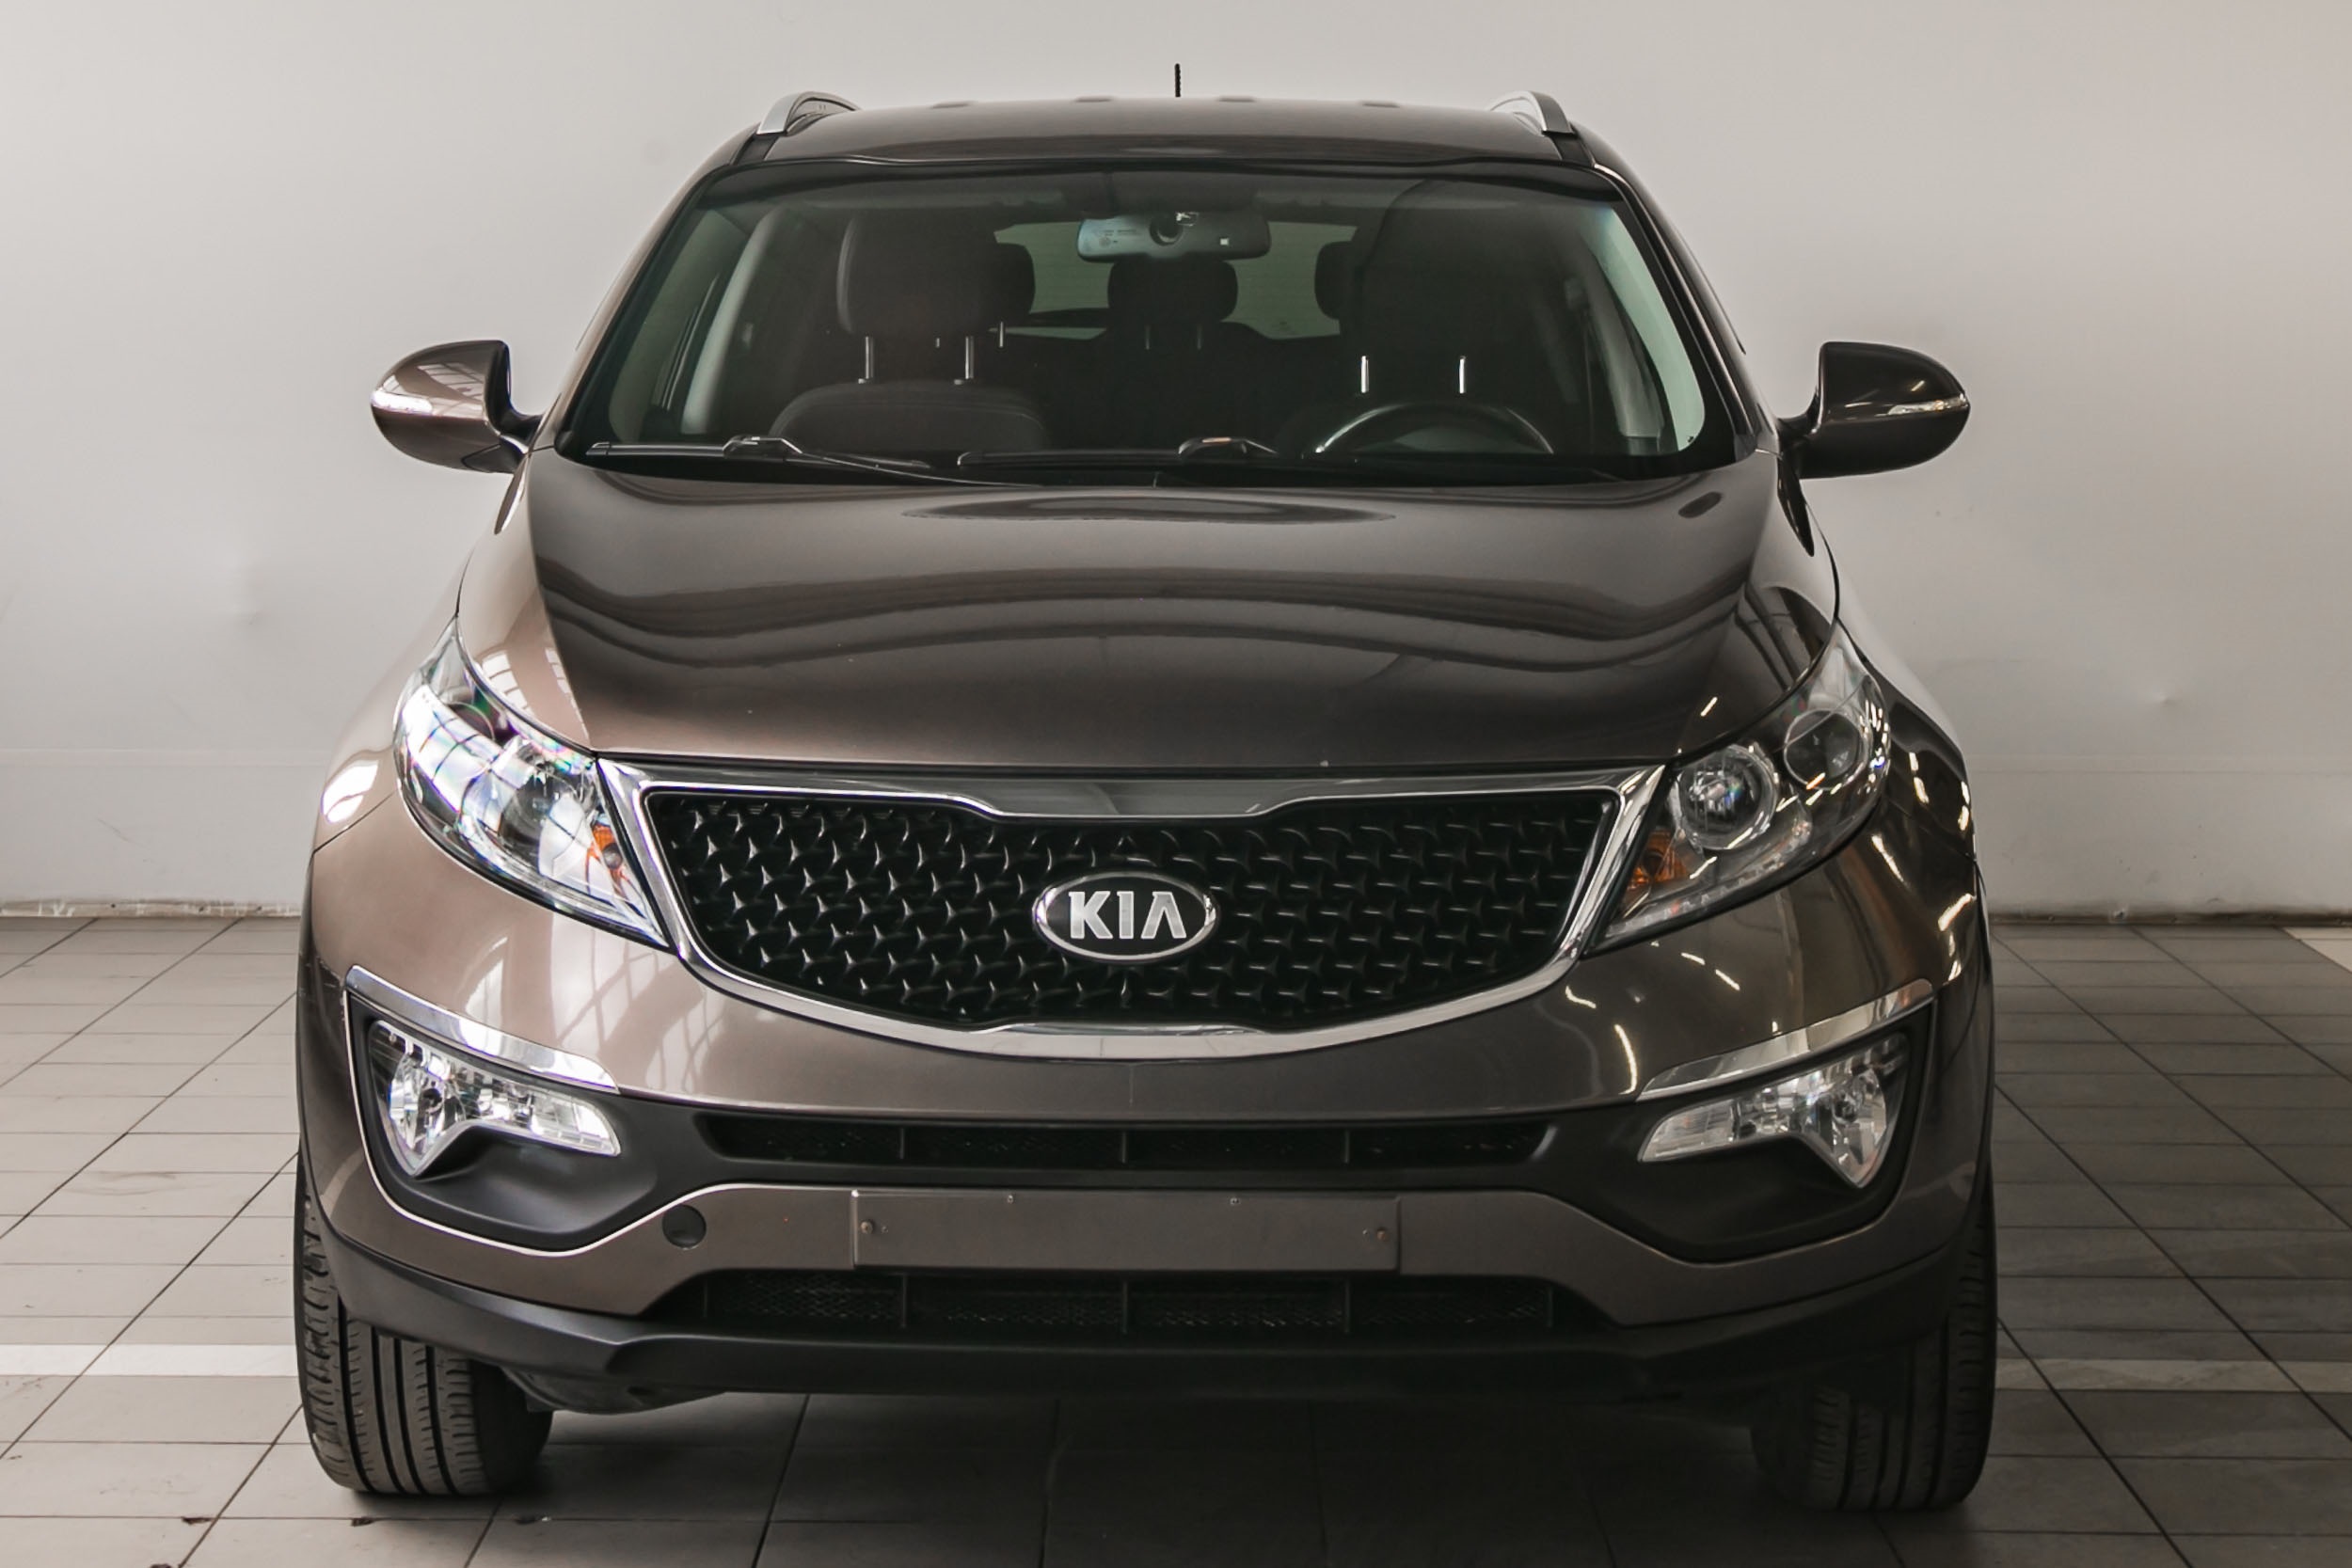 Kia Sportage 2015. Kia Sportage 2015 Review. Ford Sportage 2015. Киа Спортейдж 2015 смарк Кей. Купить киа спортейдж в перми